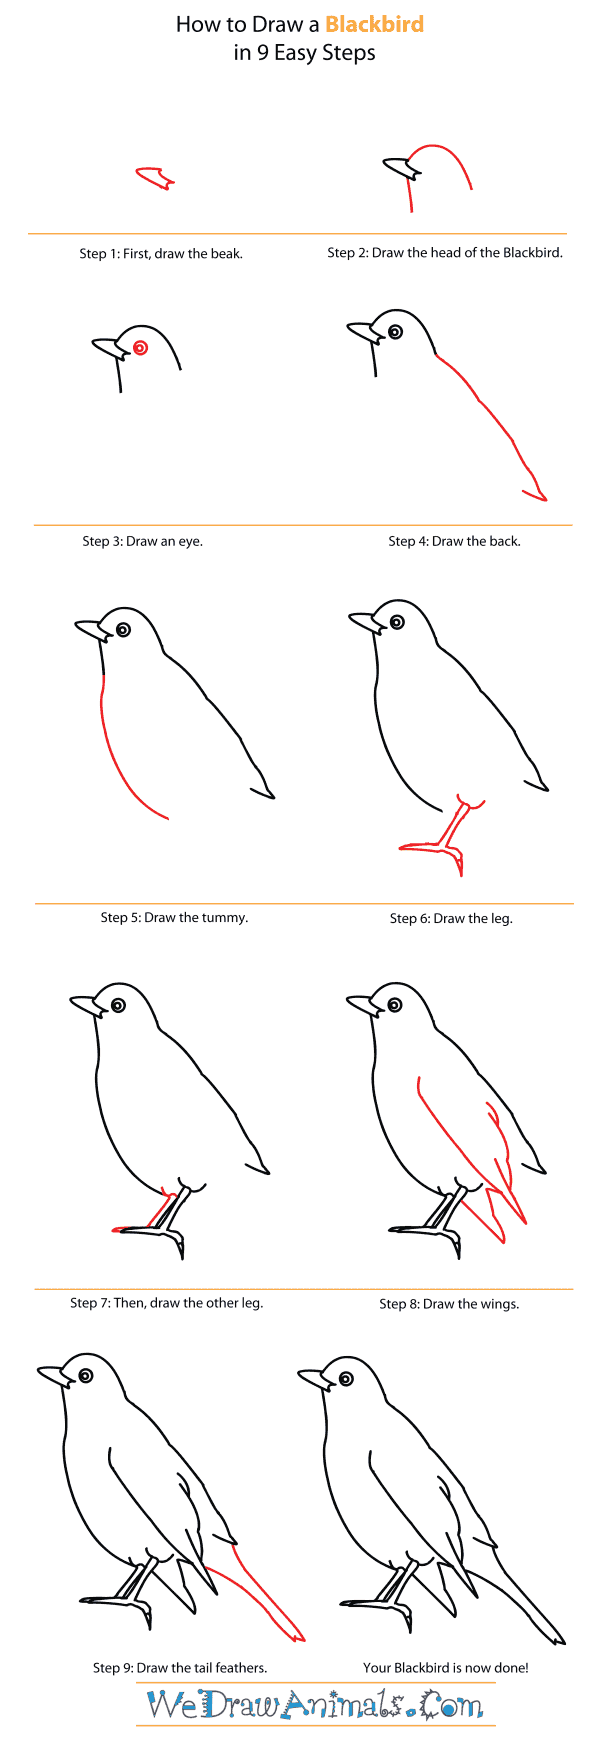 How to Draw a Blackbird - Step-By-Step Tutorial